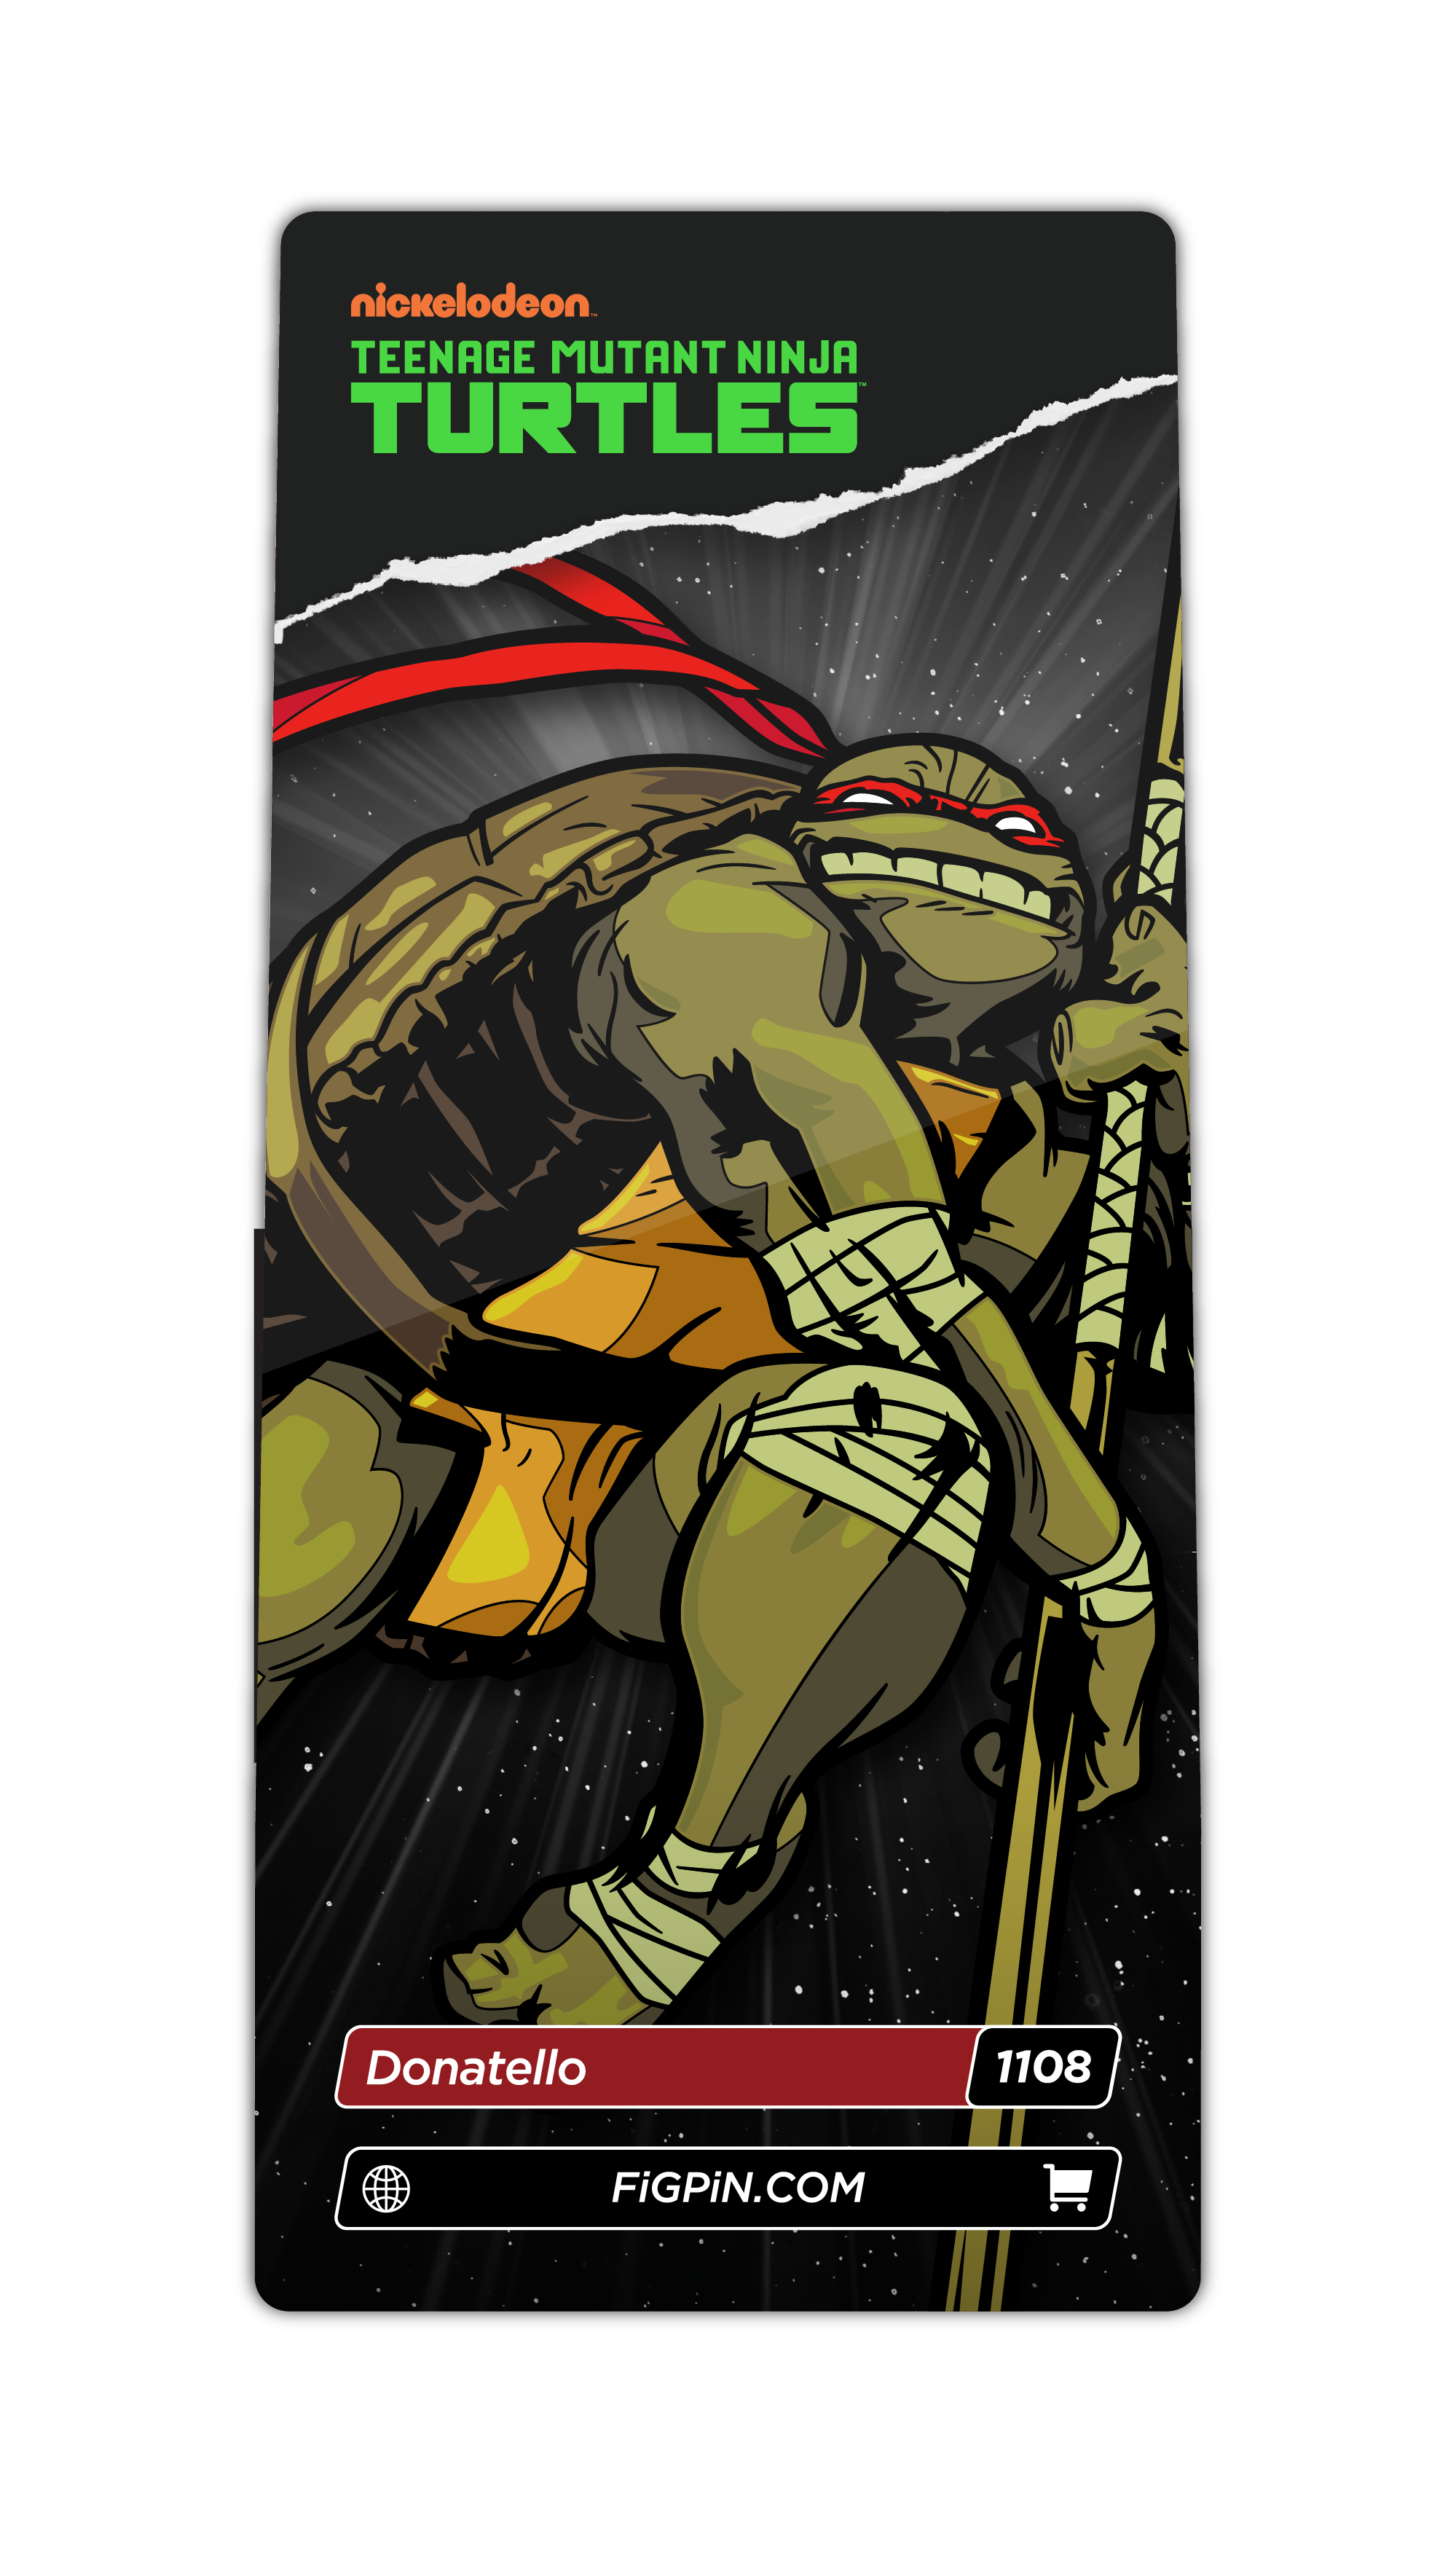 Donatello (1108)